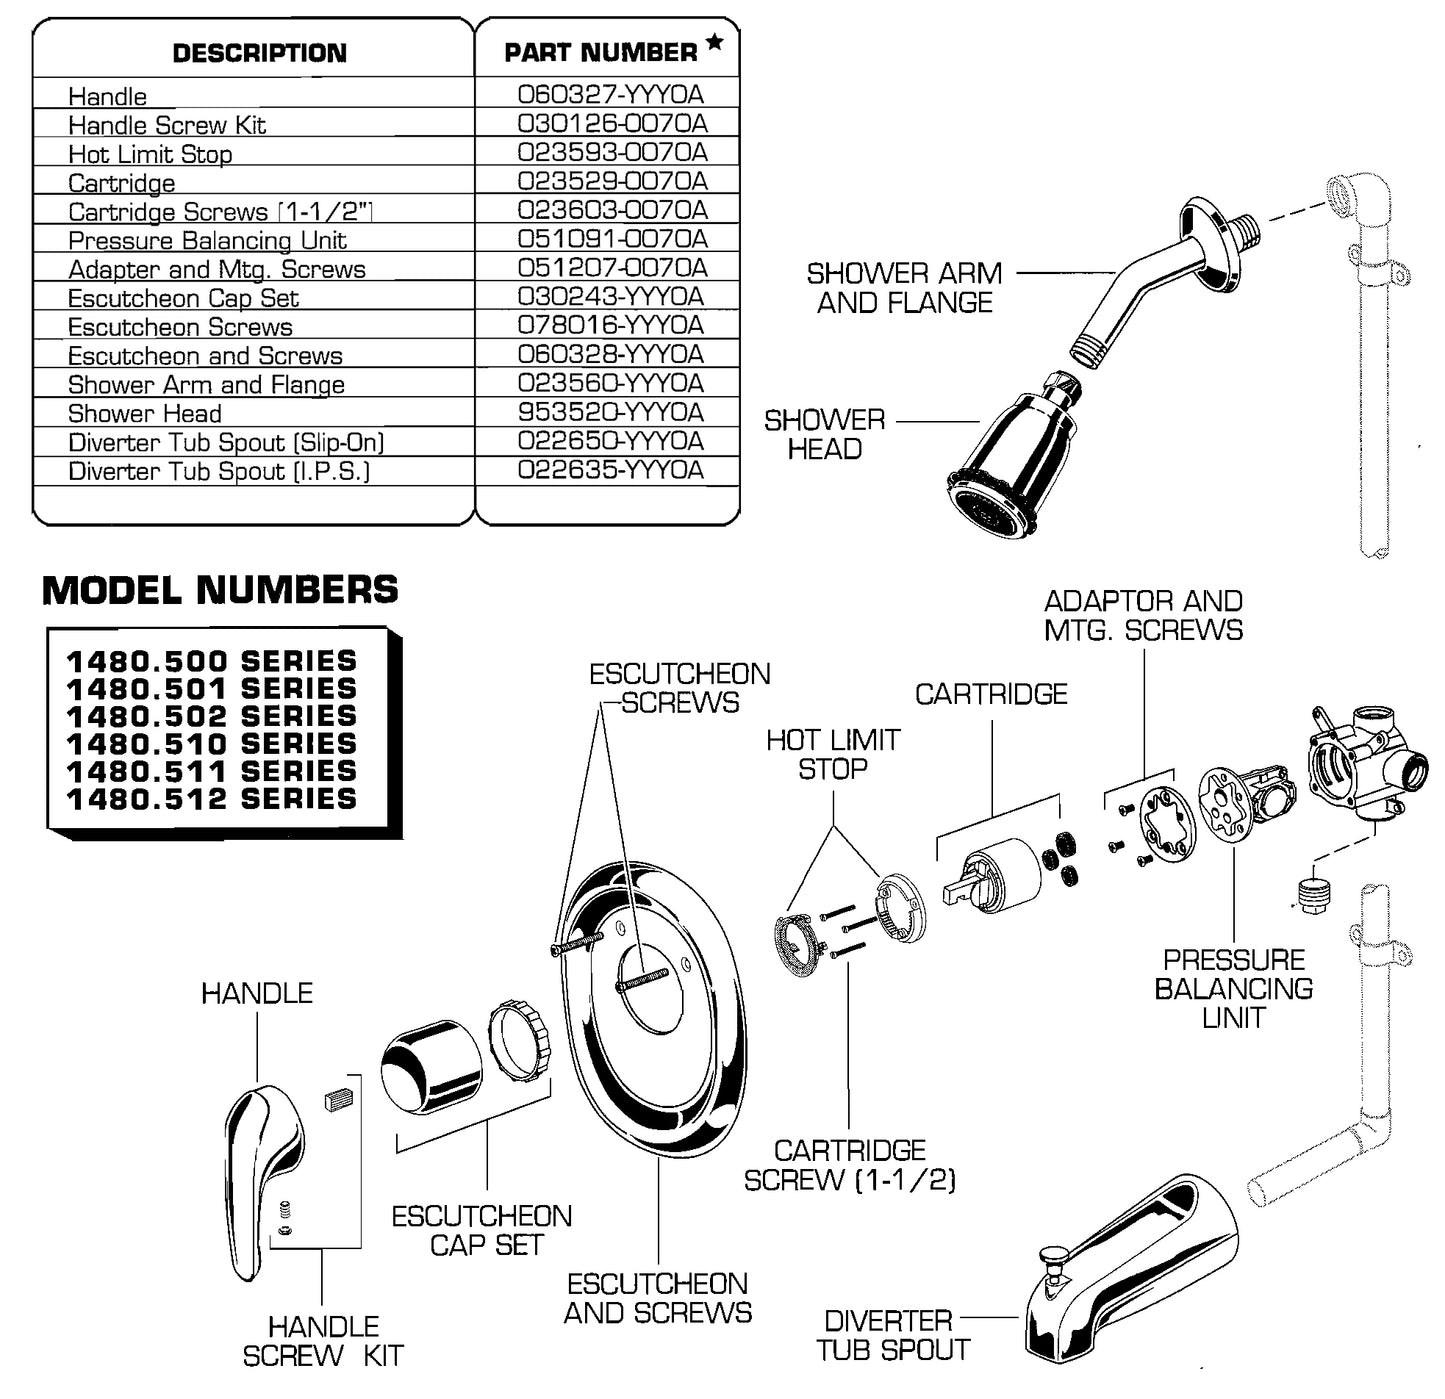 051091-0070A - Reliant Plus Bath Shower Pressure Balance Cartridge